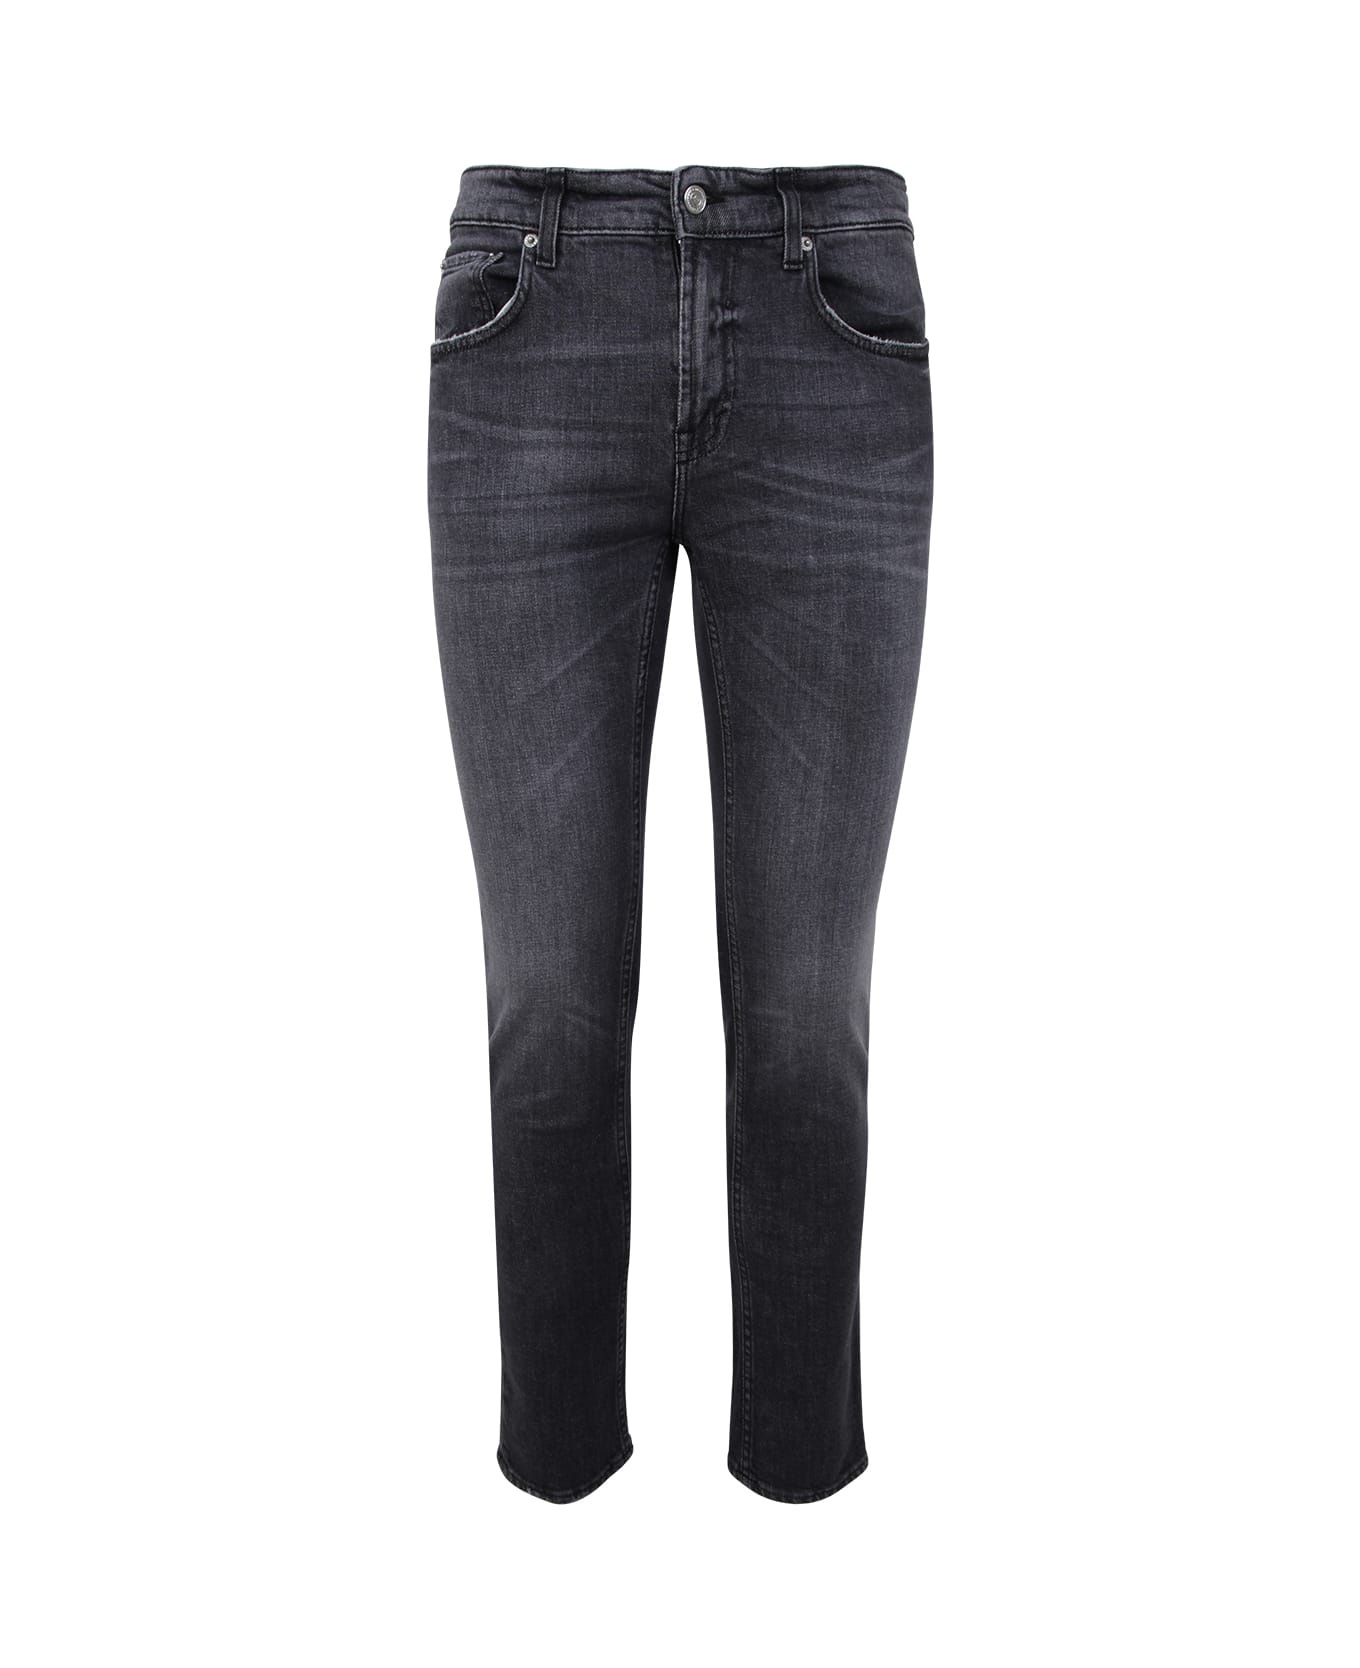 Department Five Skeith Skinny Jeans - Black